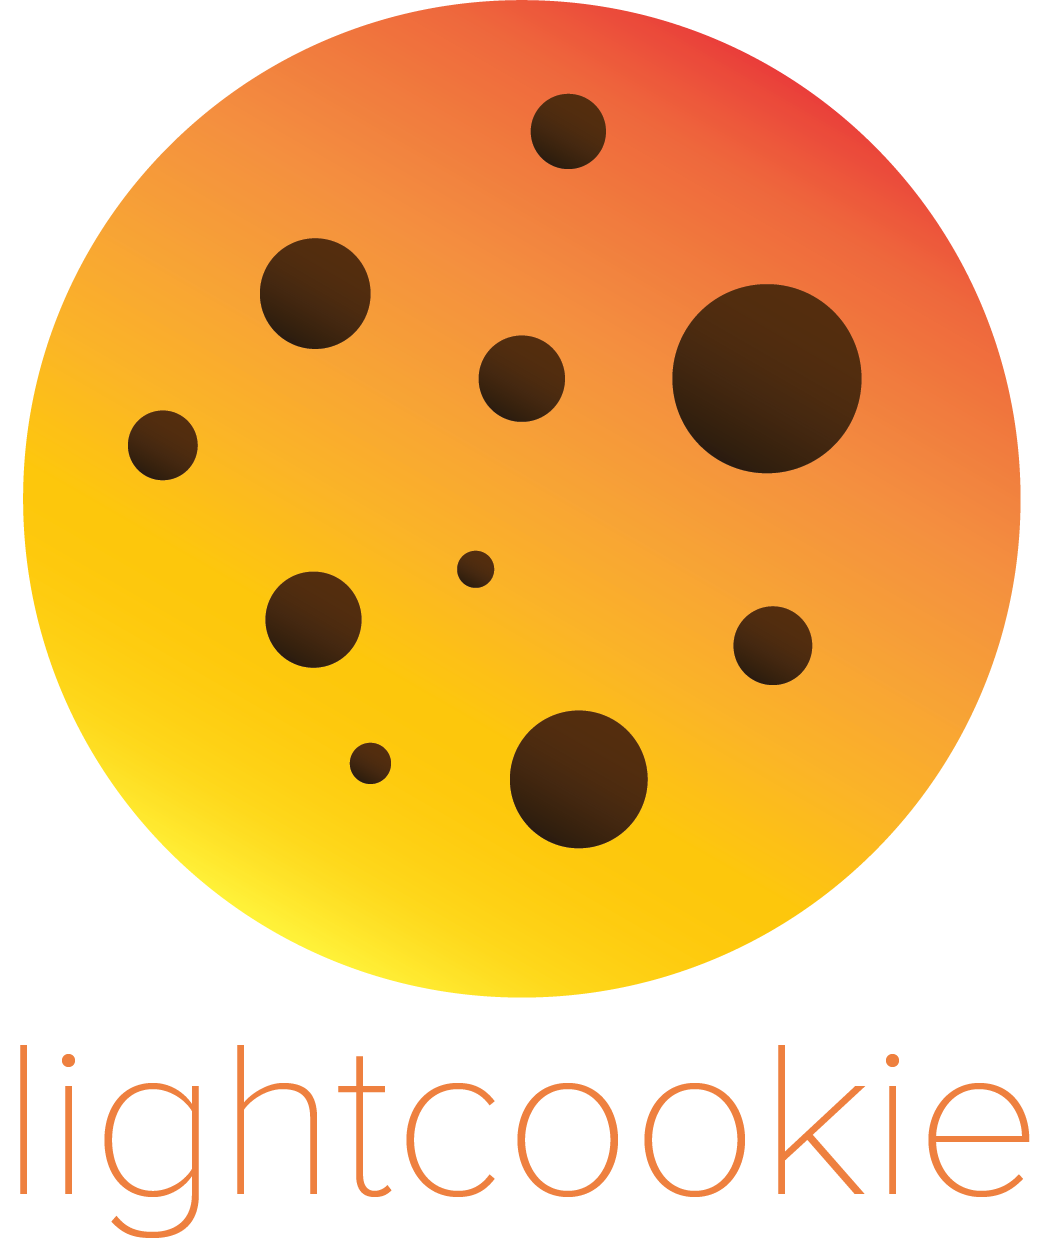 lightcookie logo